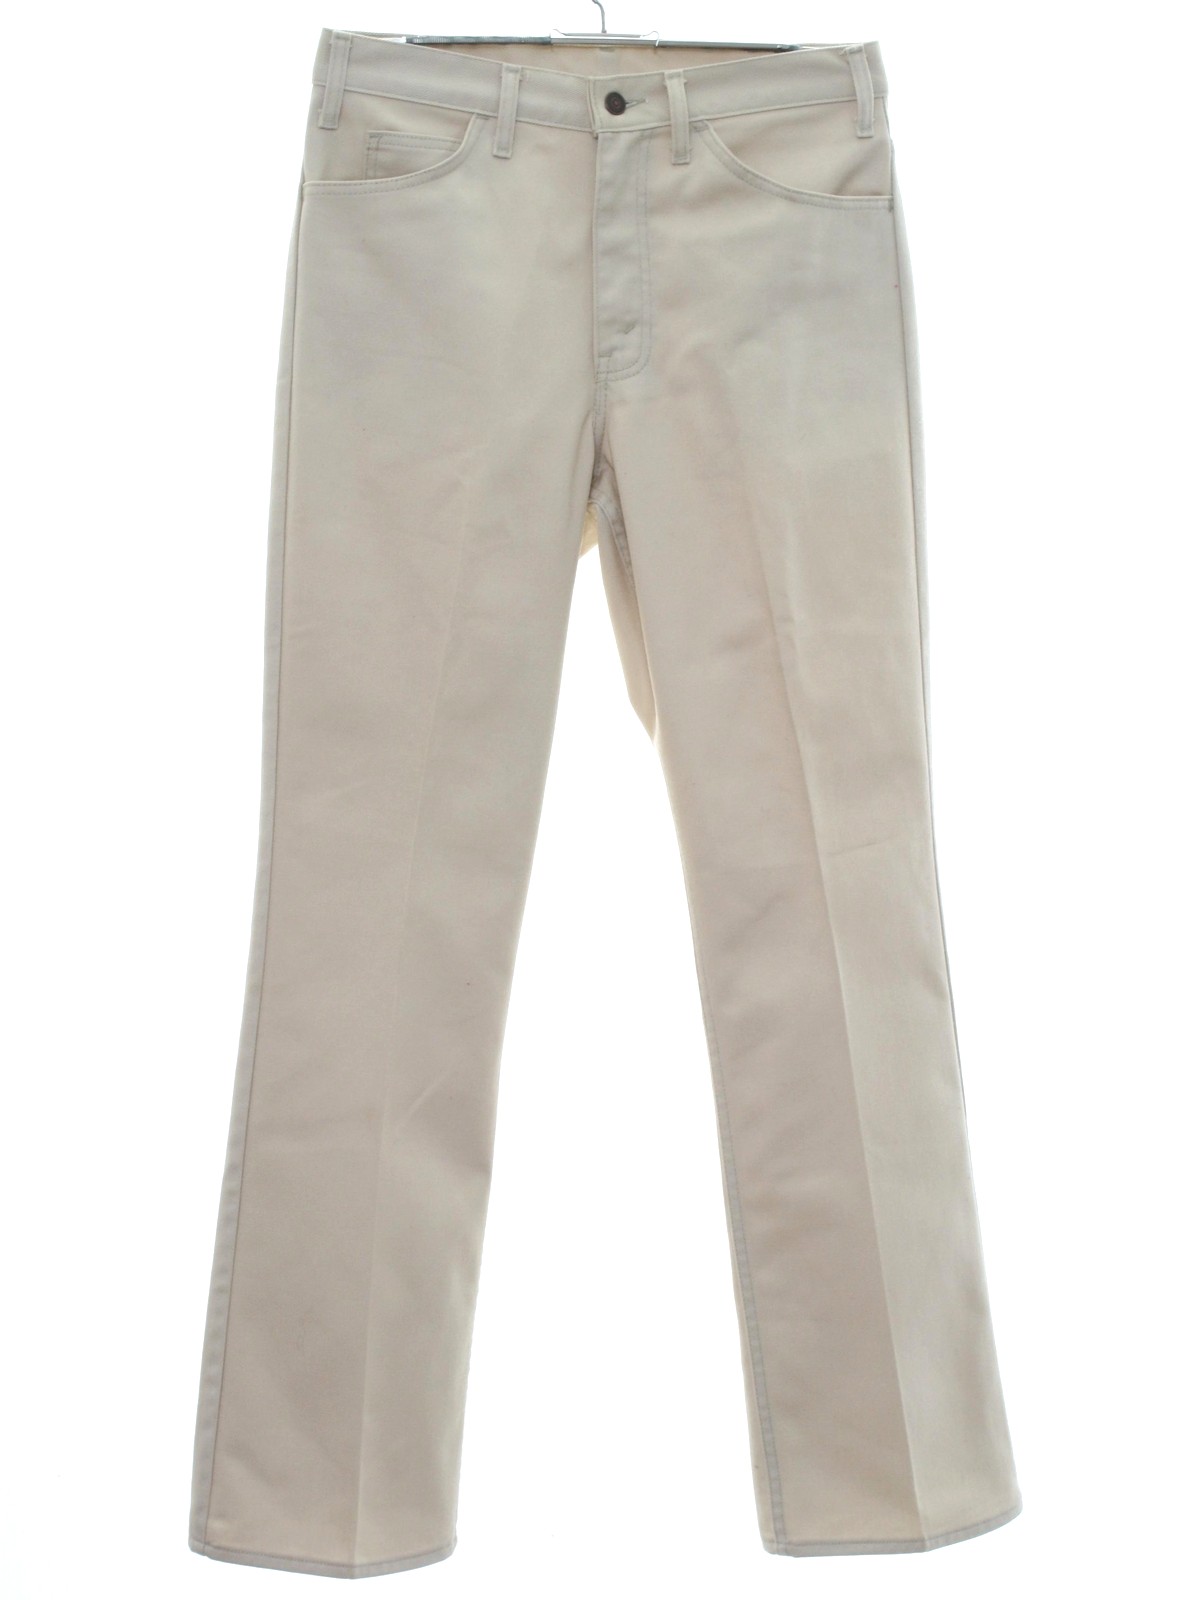 70s Retro Flared Pants / Flares: 70s -J C Penney- Mens cream cotton ...